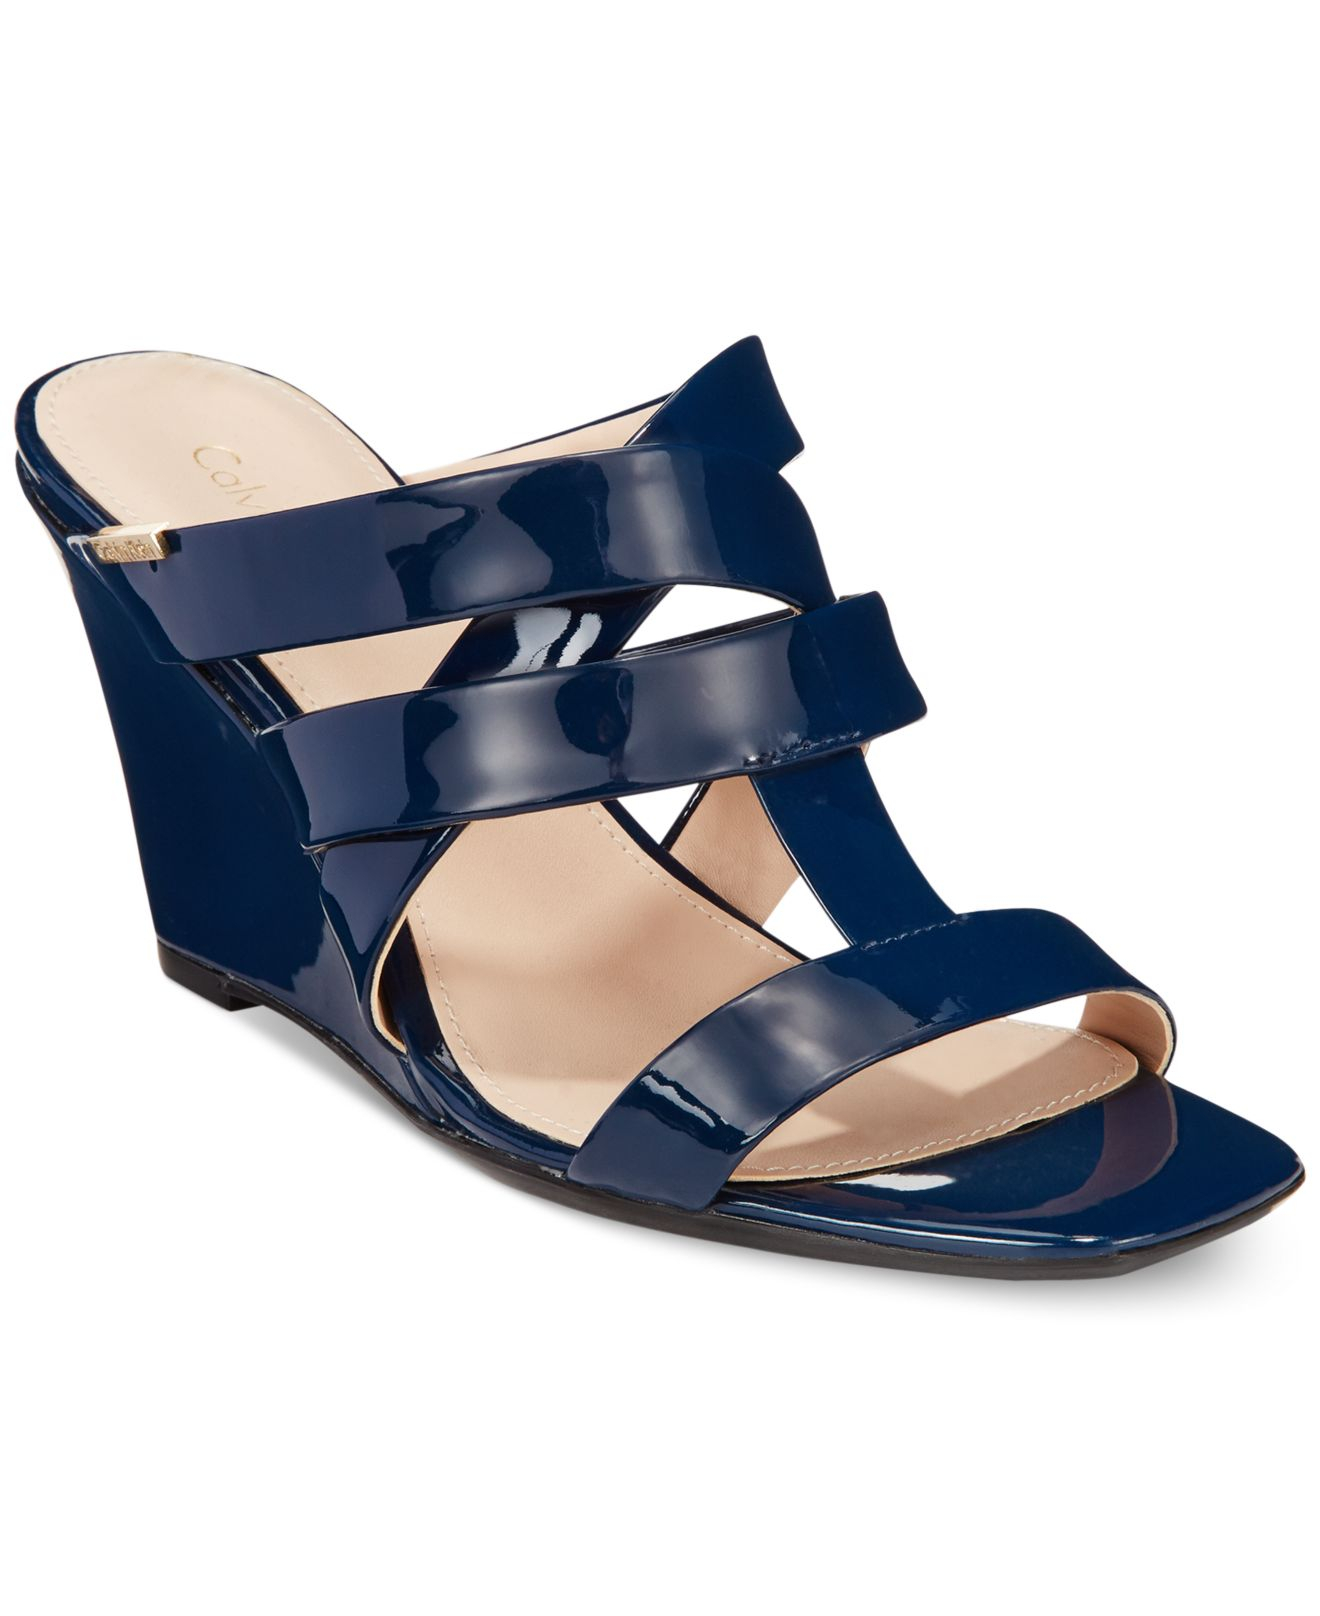 Buy > dark blue wedge sandals > in stock